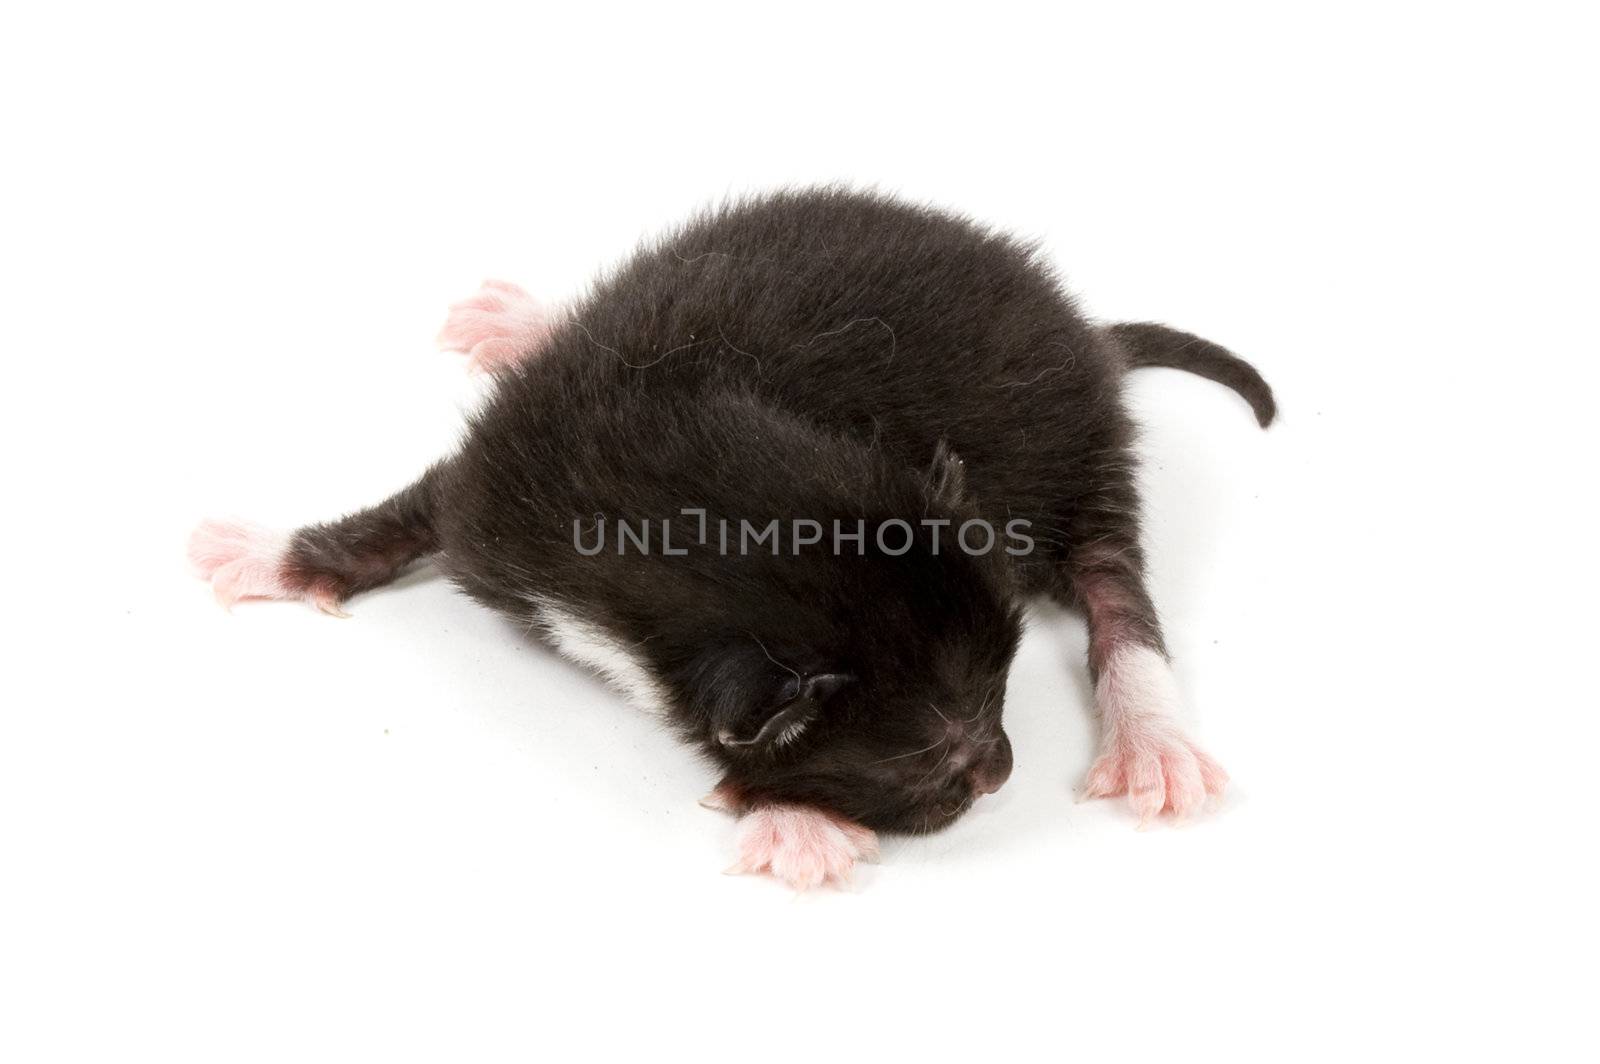 just new born black kitten by ladyminnie